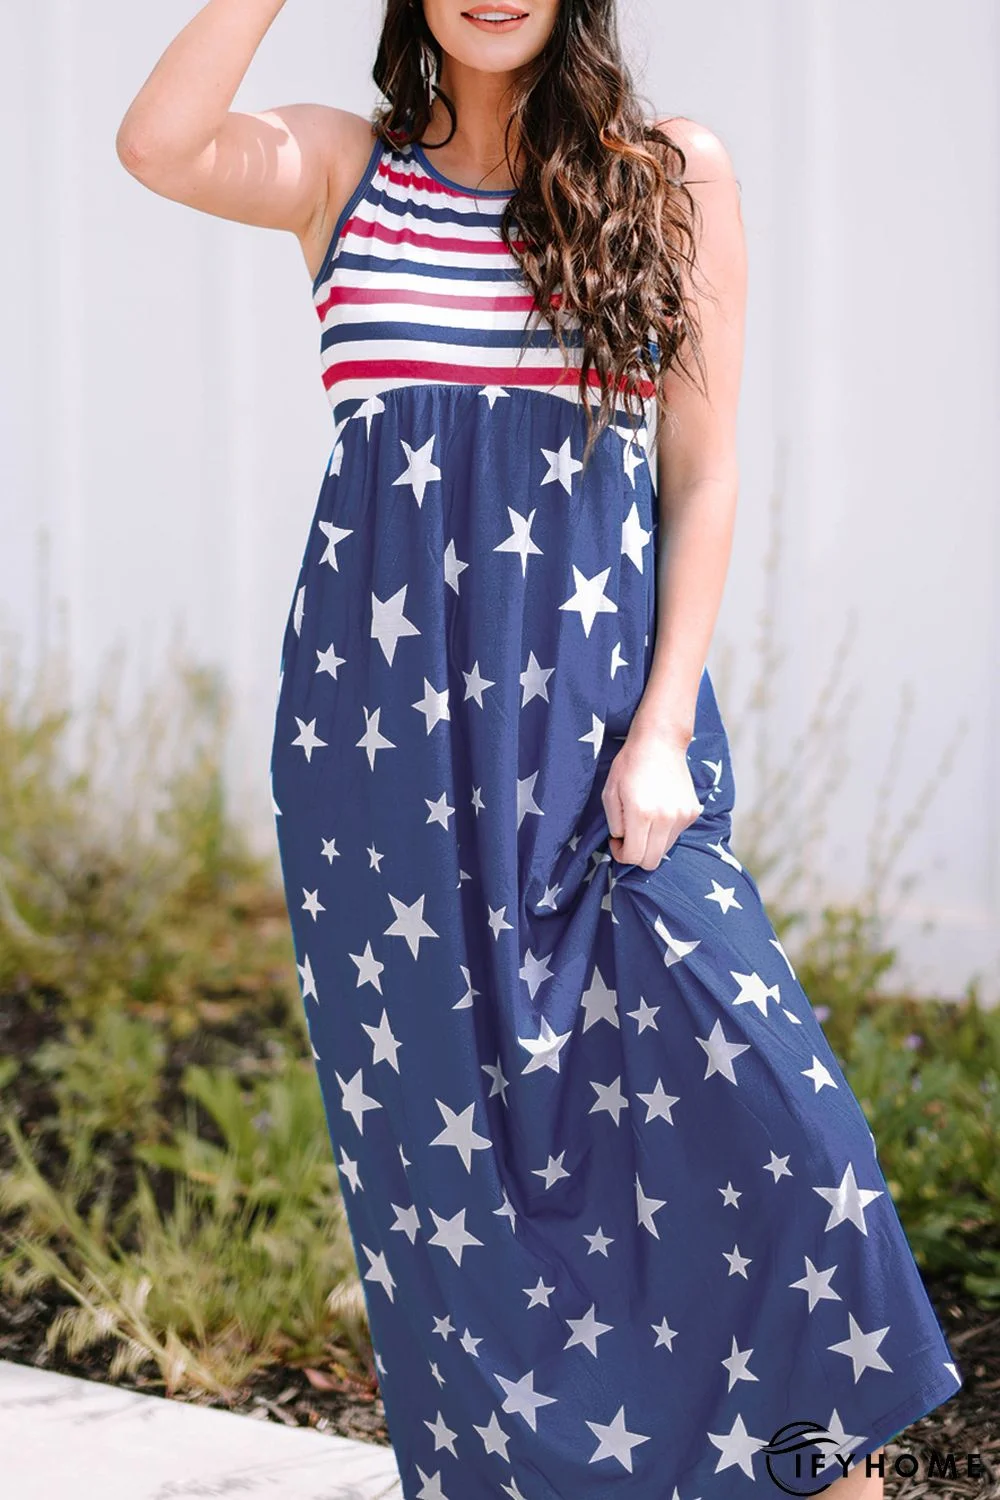 Blue Stripes and Stars Sleeveless Maxi Dress with Pockets | IFYHOME